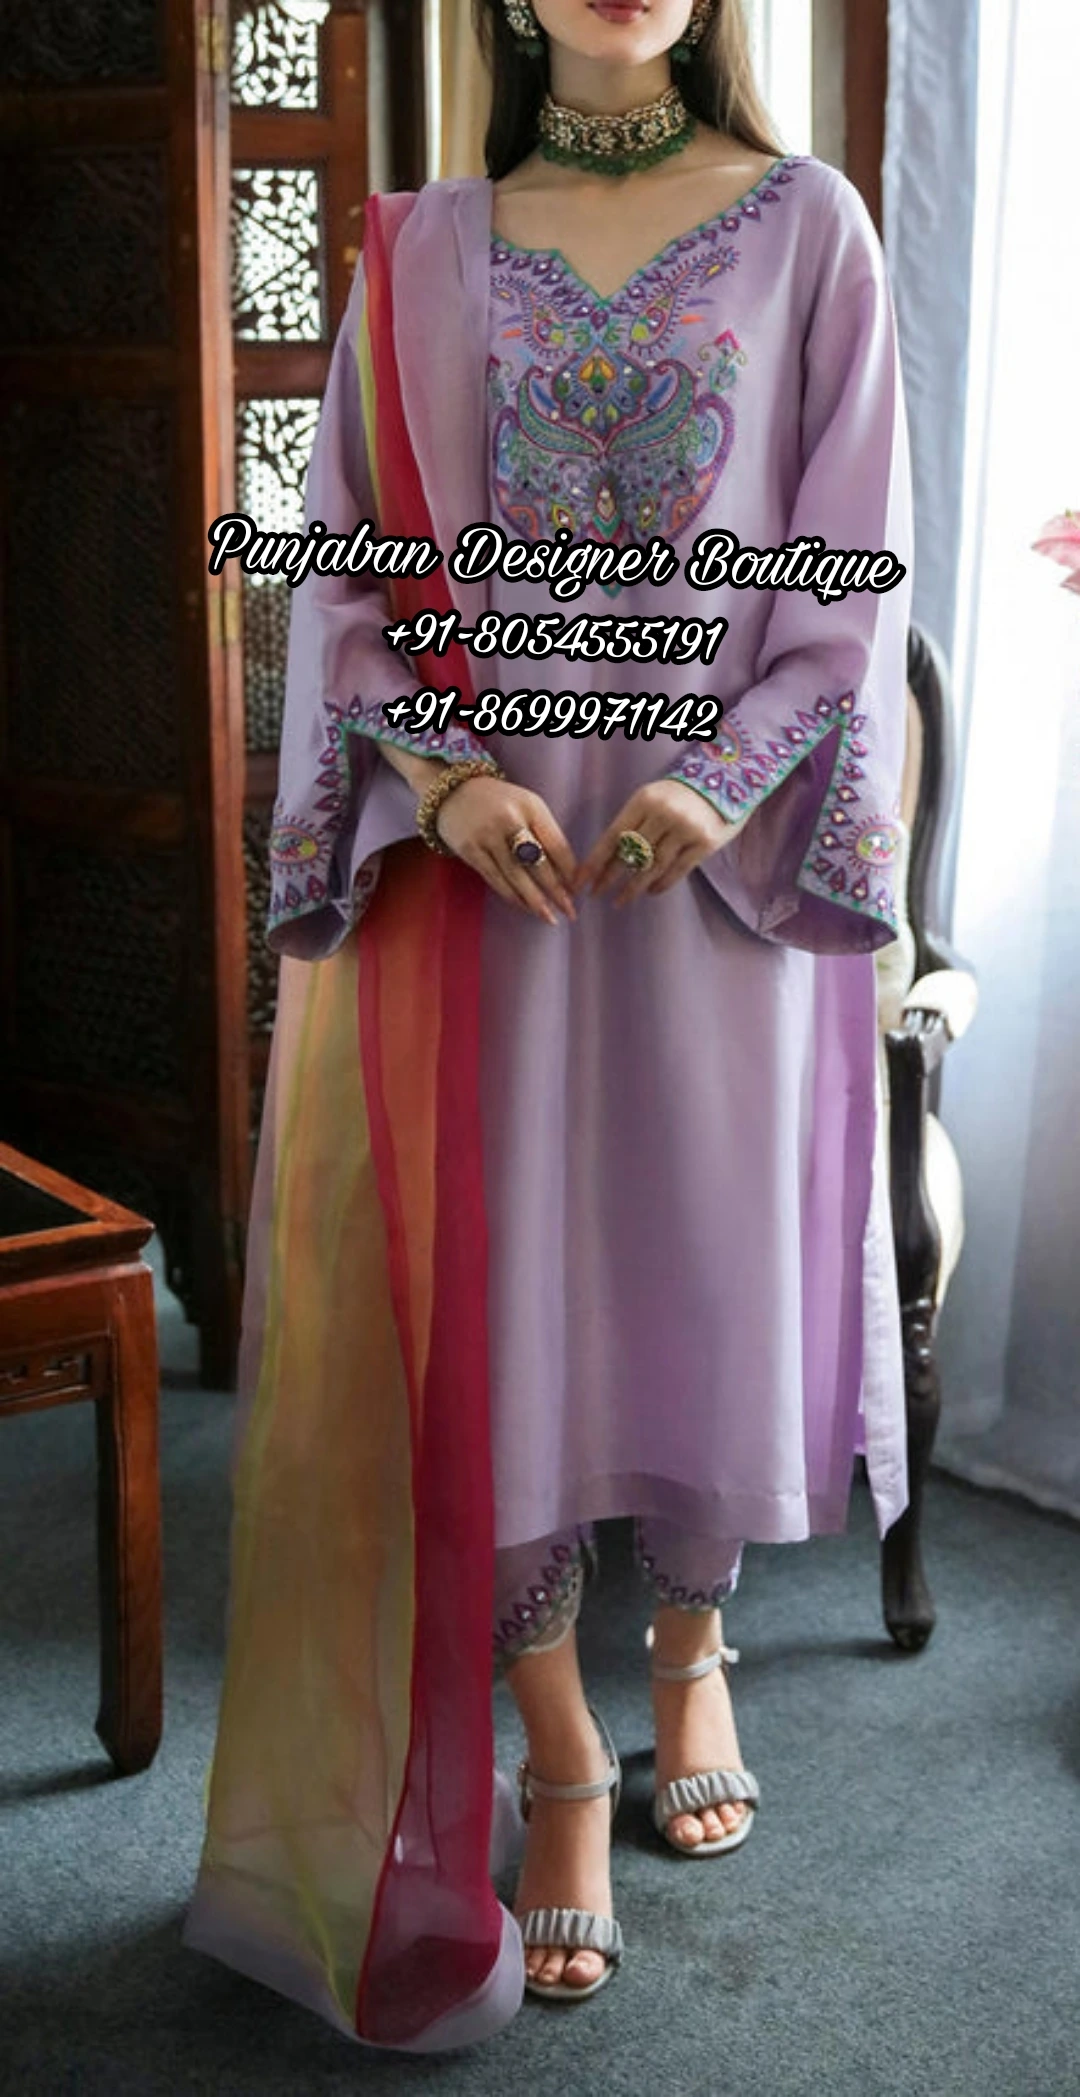 Indian Punjabi Suit Neck Design | Punjaban Designer Boutique